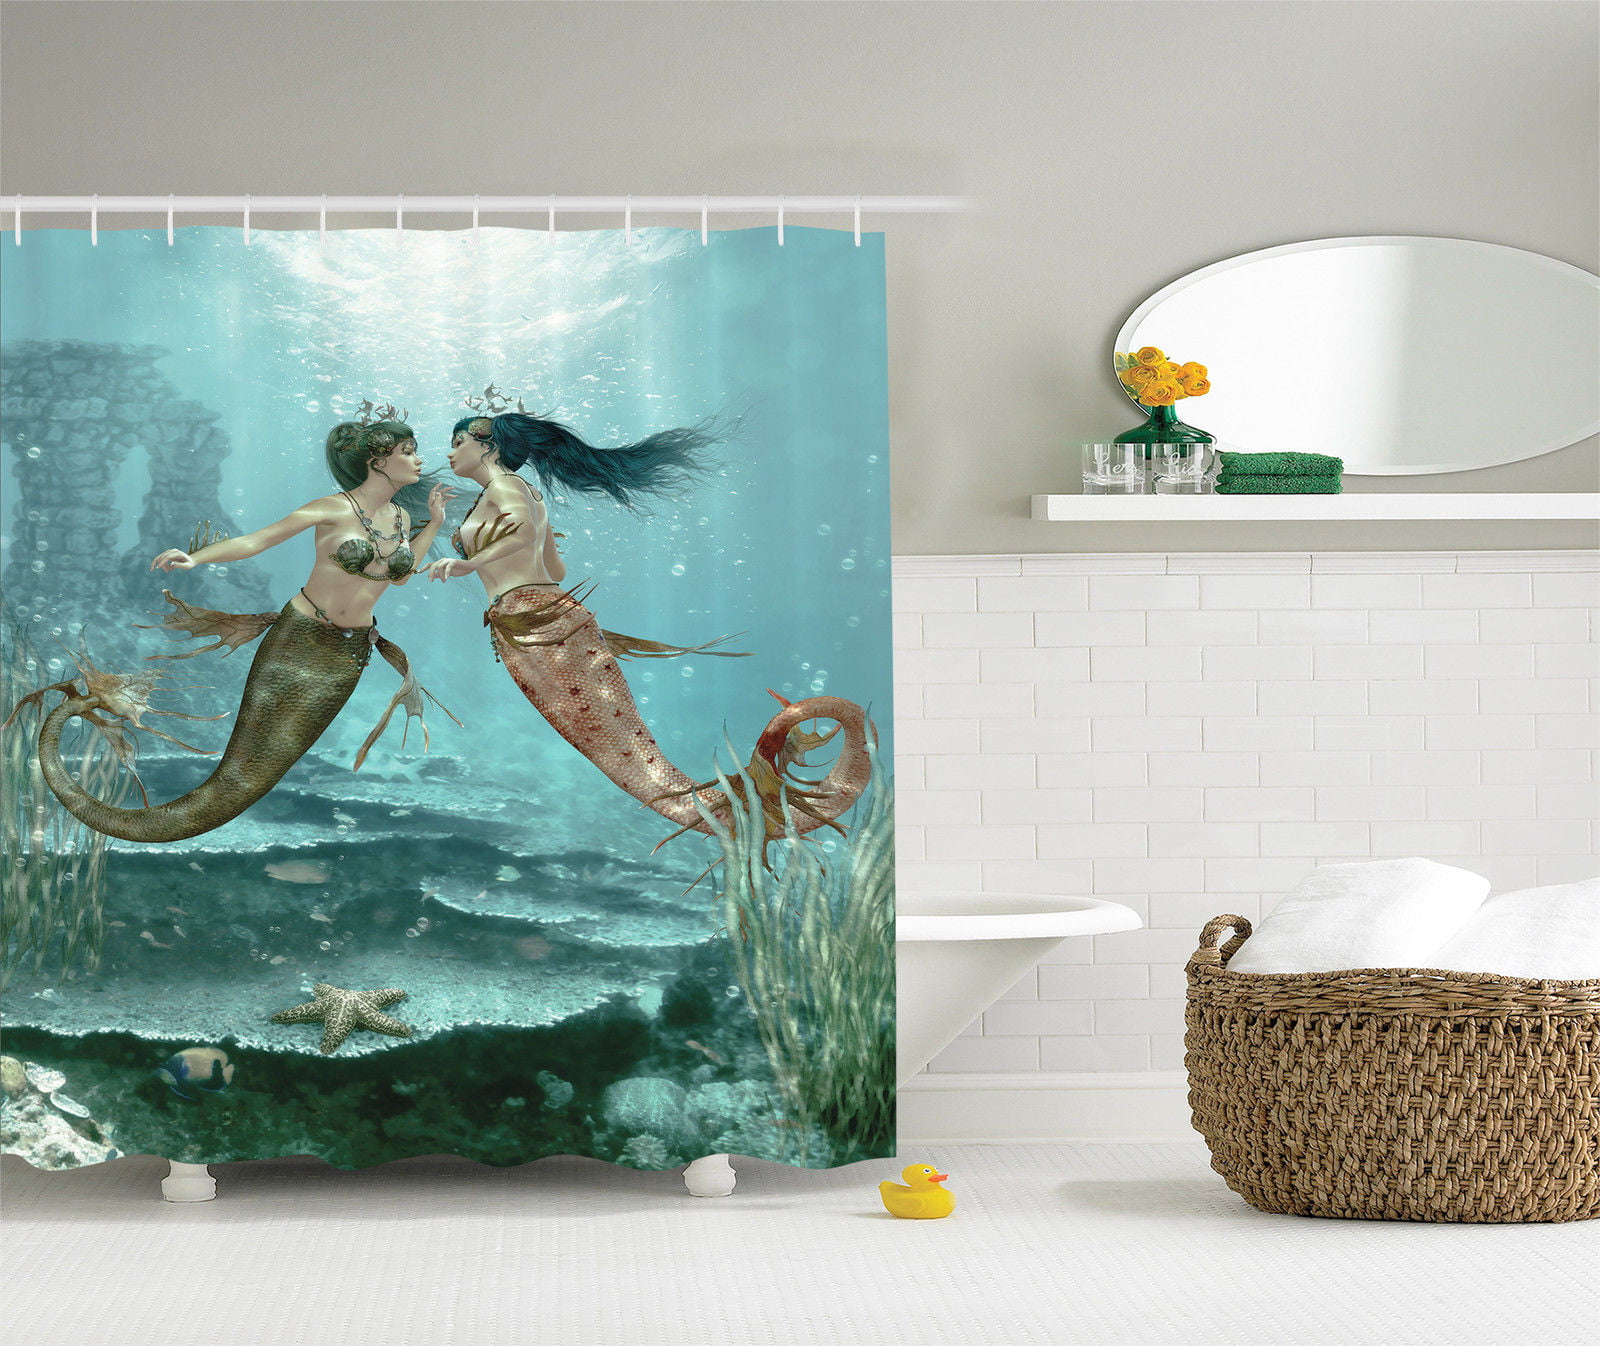 Abstract Underwater Mermaid Fabric Shower Curtain Set Bathroom Decor w/ Hooks 